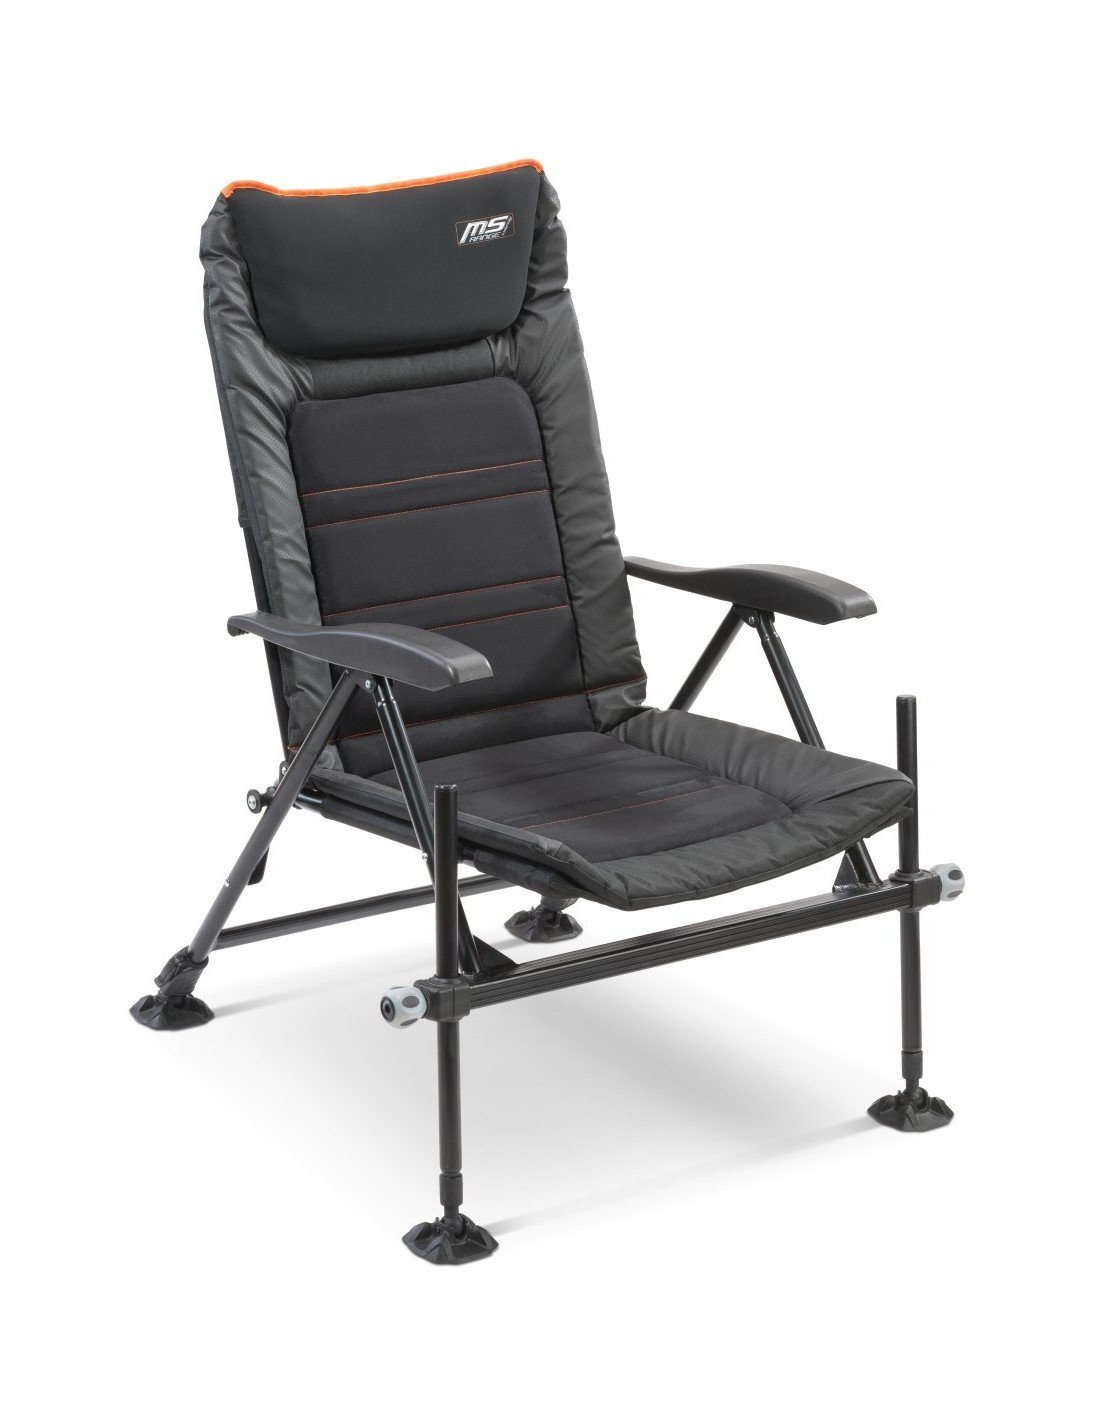 MS Range Feeder Chair II фидер стол